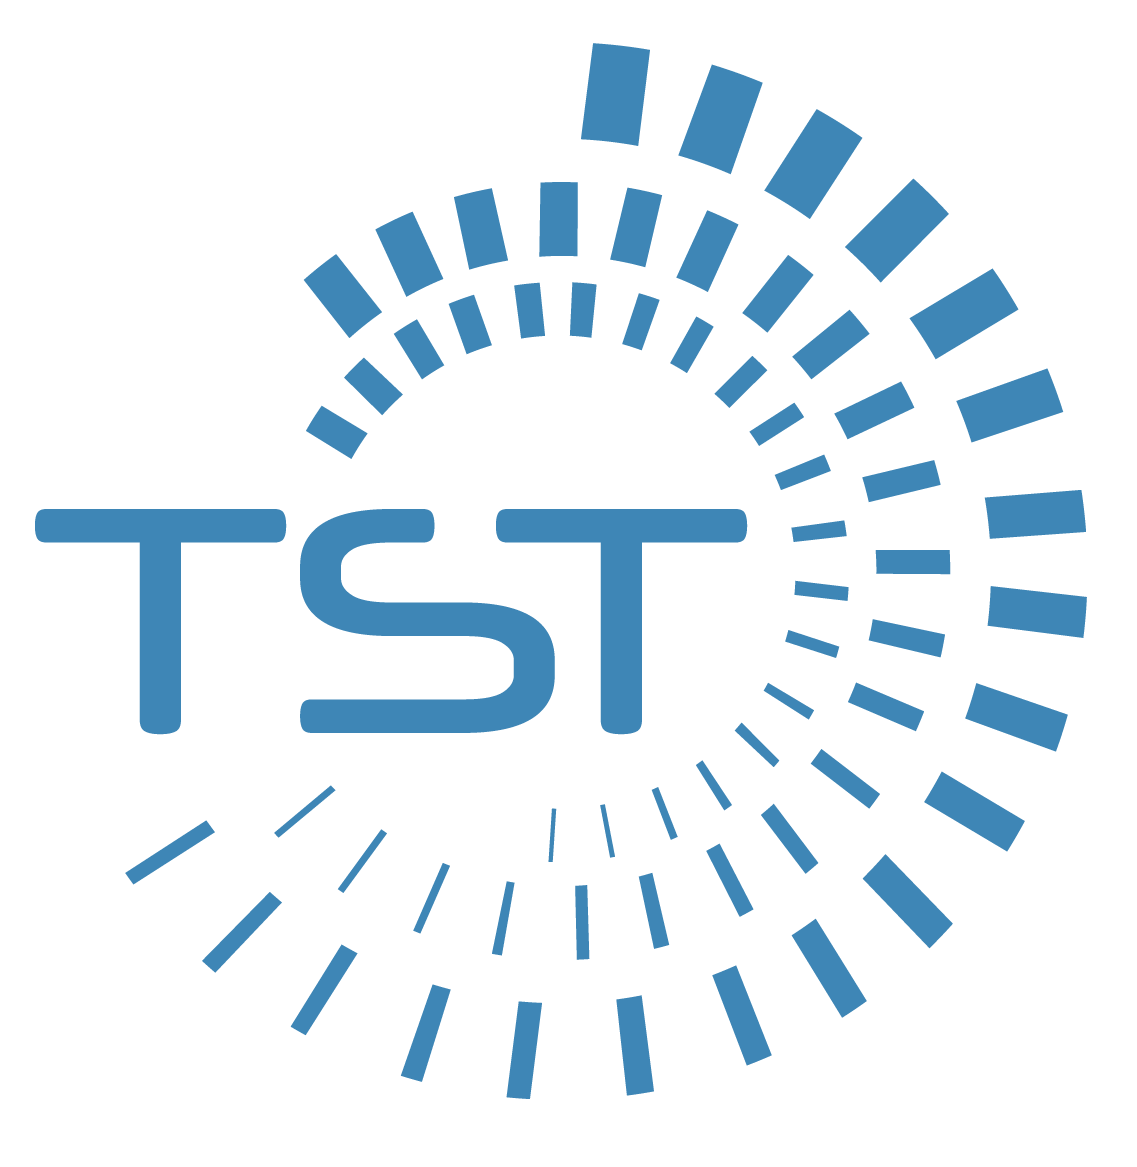 TST GmbH